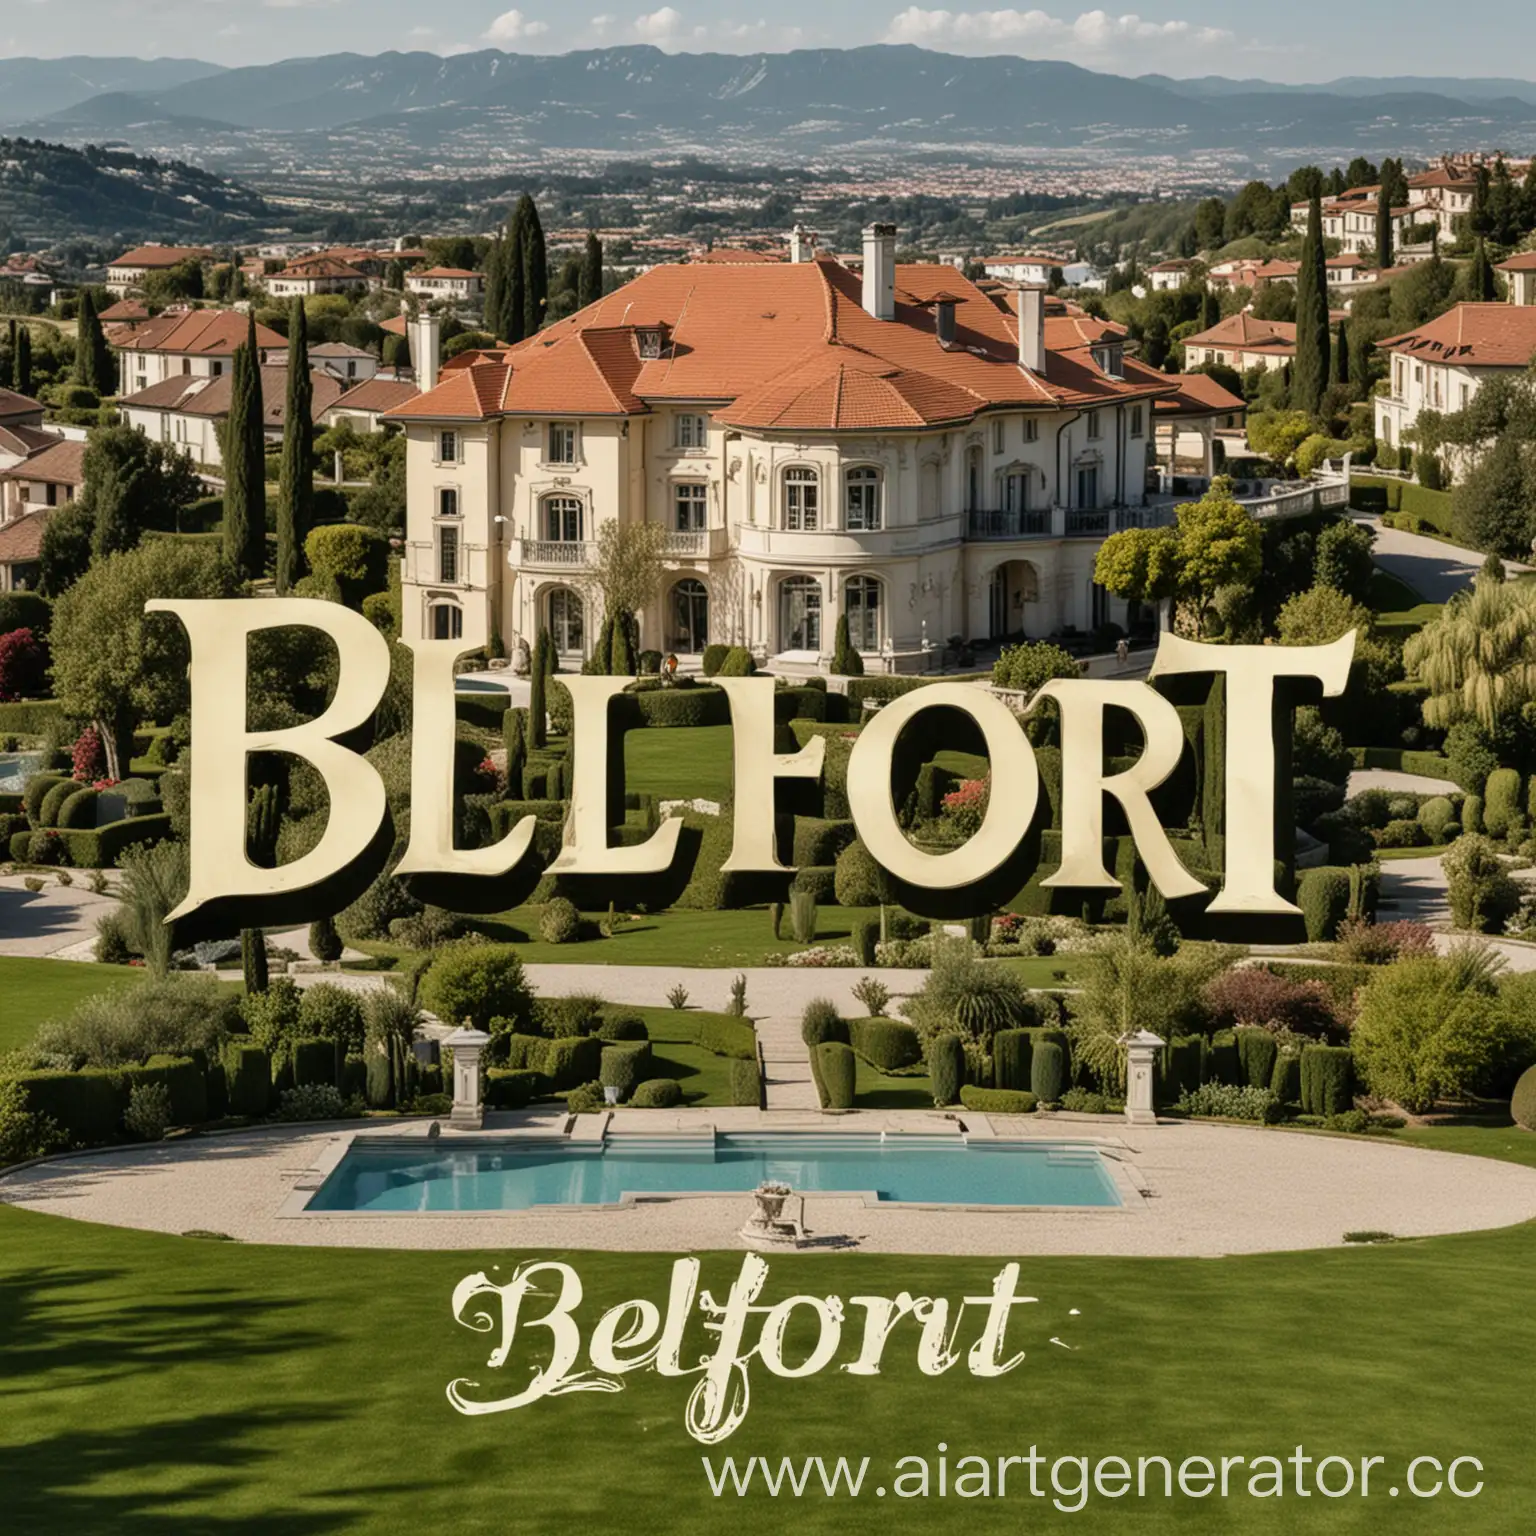 лого на тему богатства , на фоне вилла , по середине текст со словом Belfort
